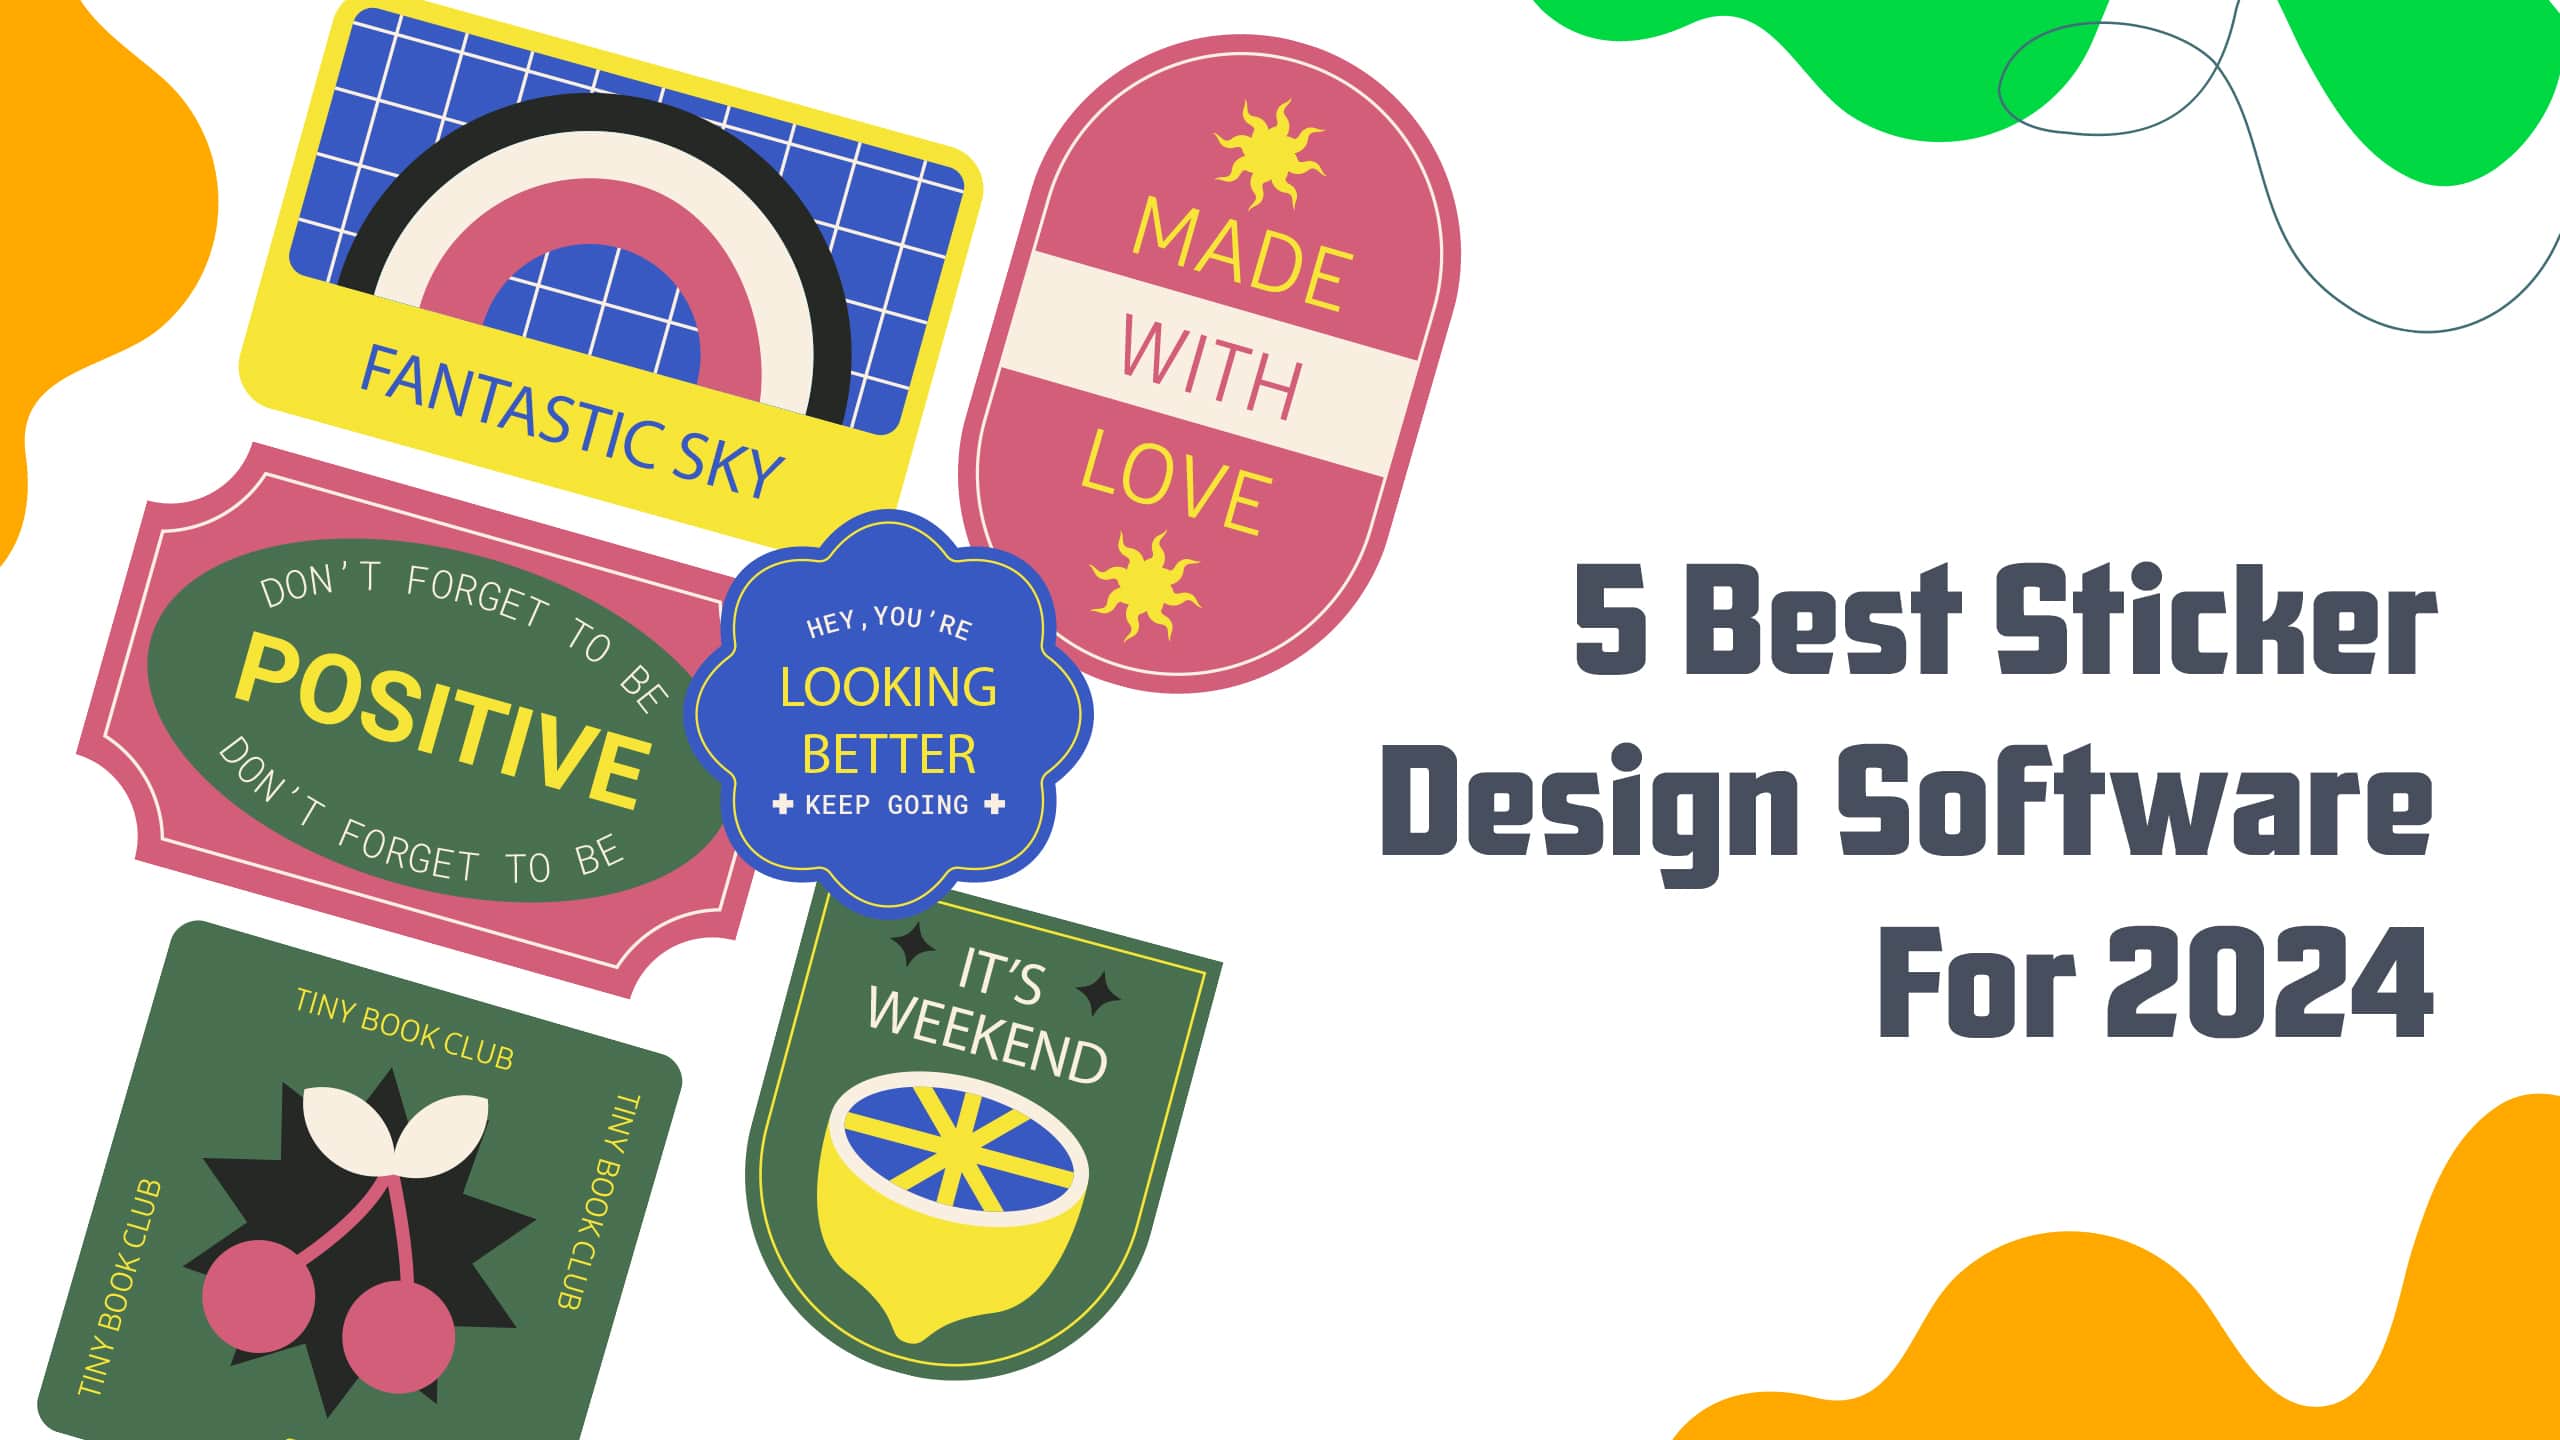 5 Best Sticker Design Software For 2024